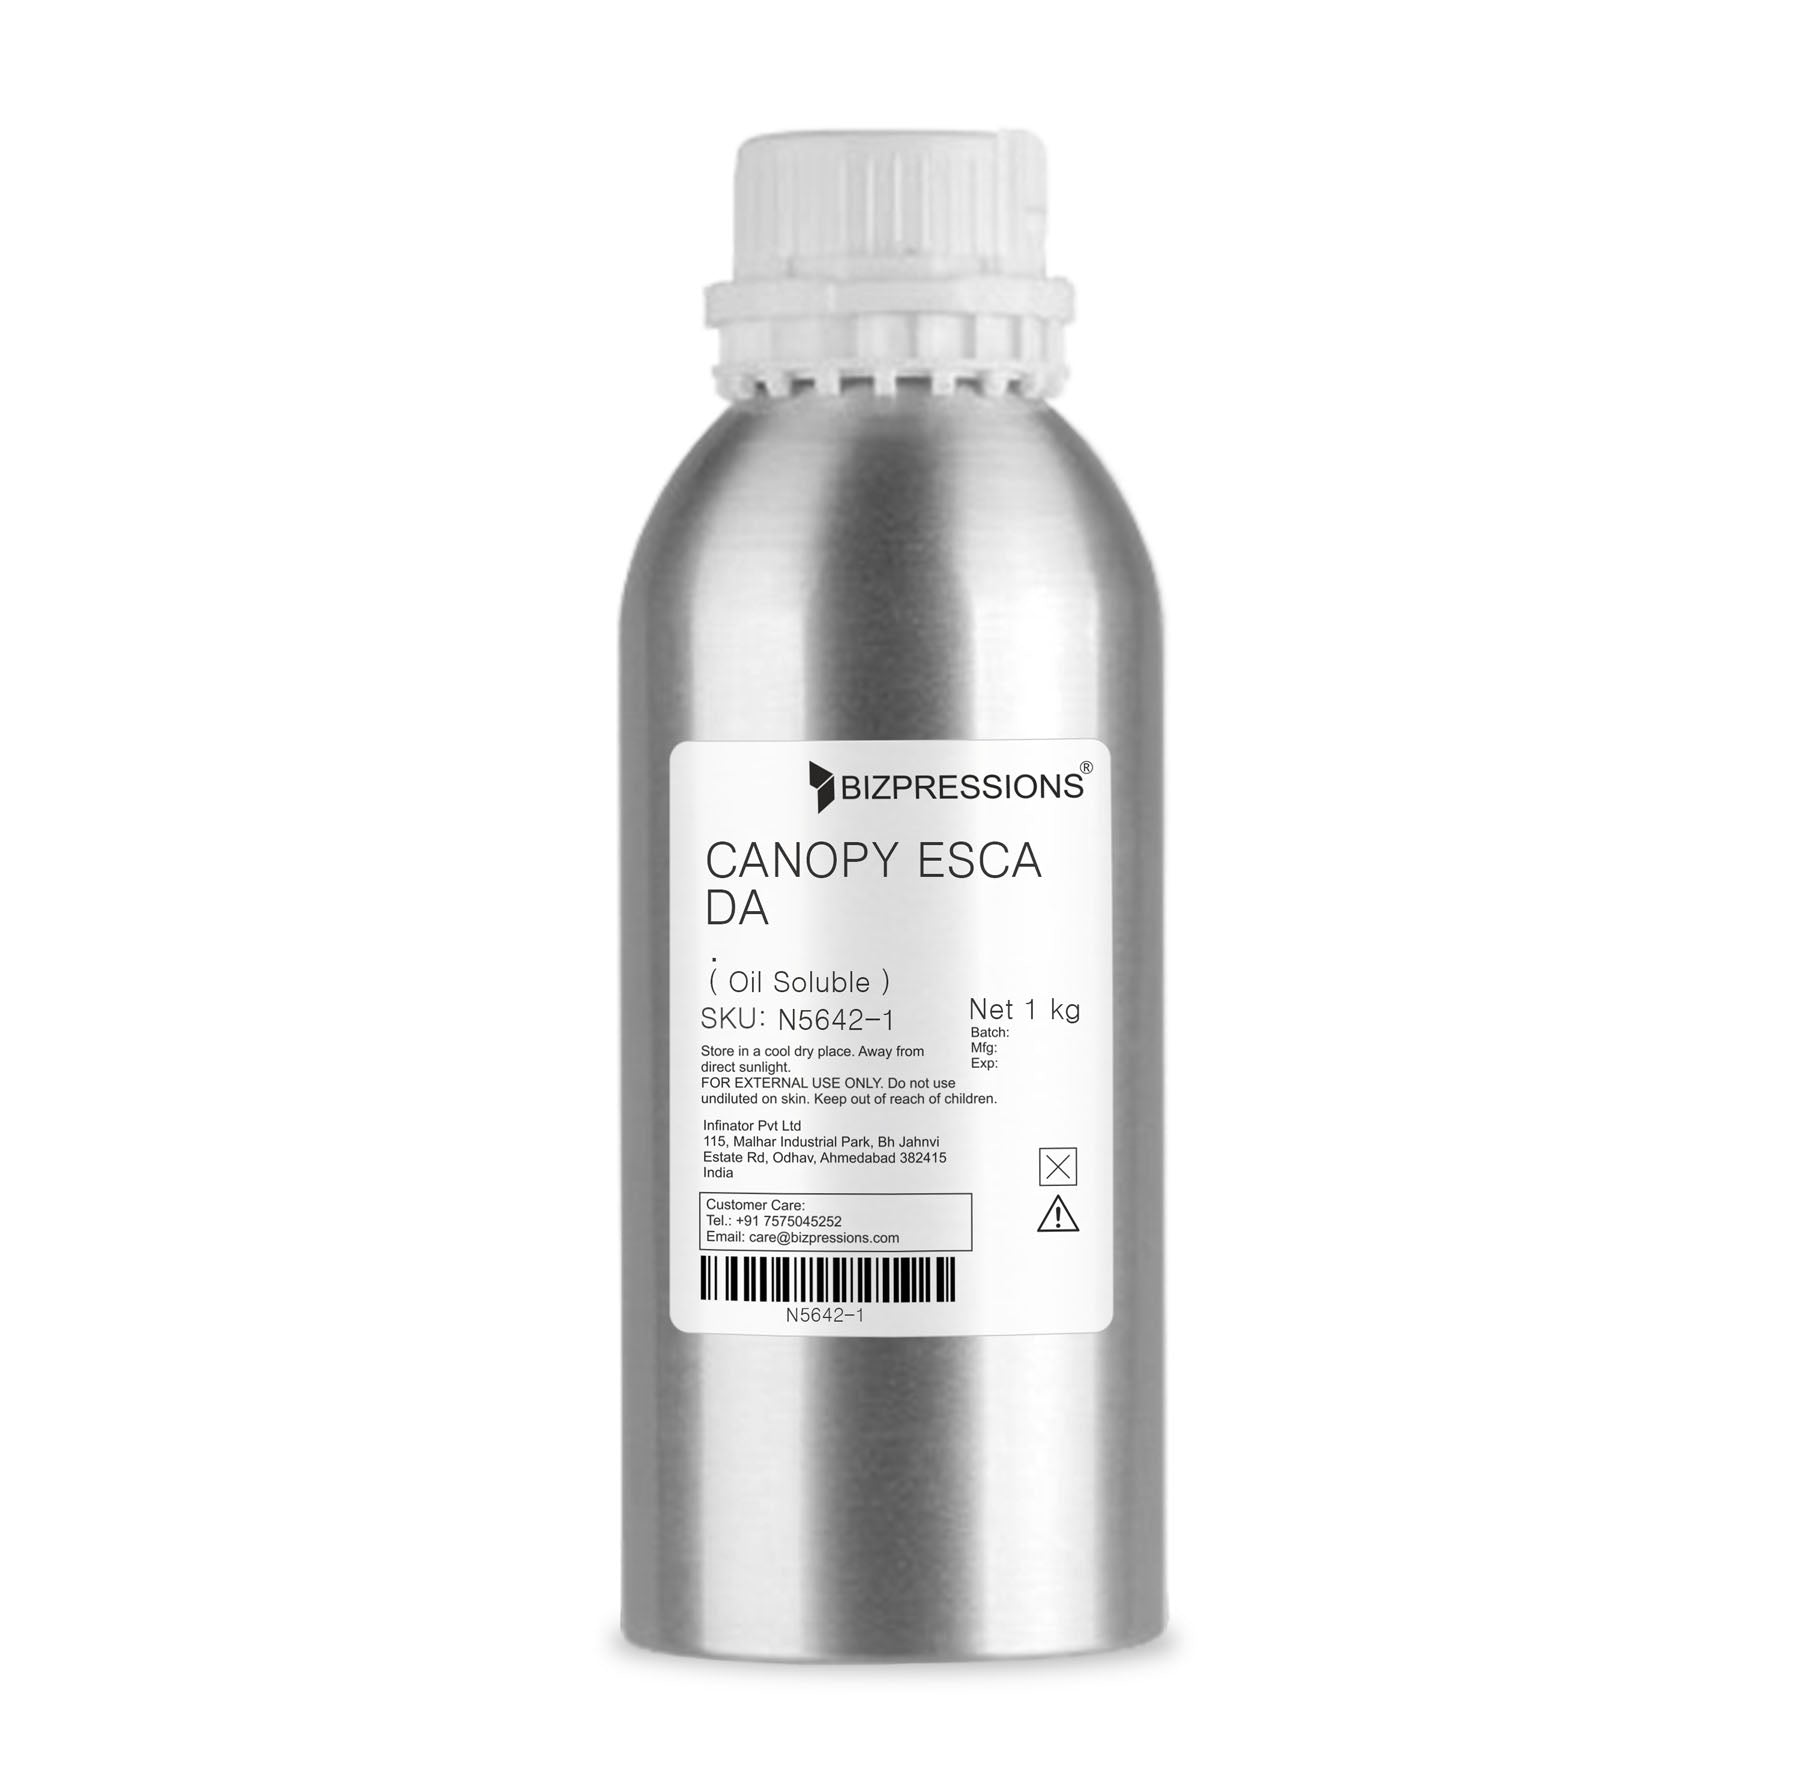 CANOPY ESCADA - Fragrance ( Oil Soluble ) - 1 kg